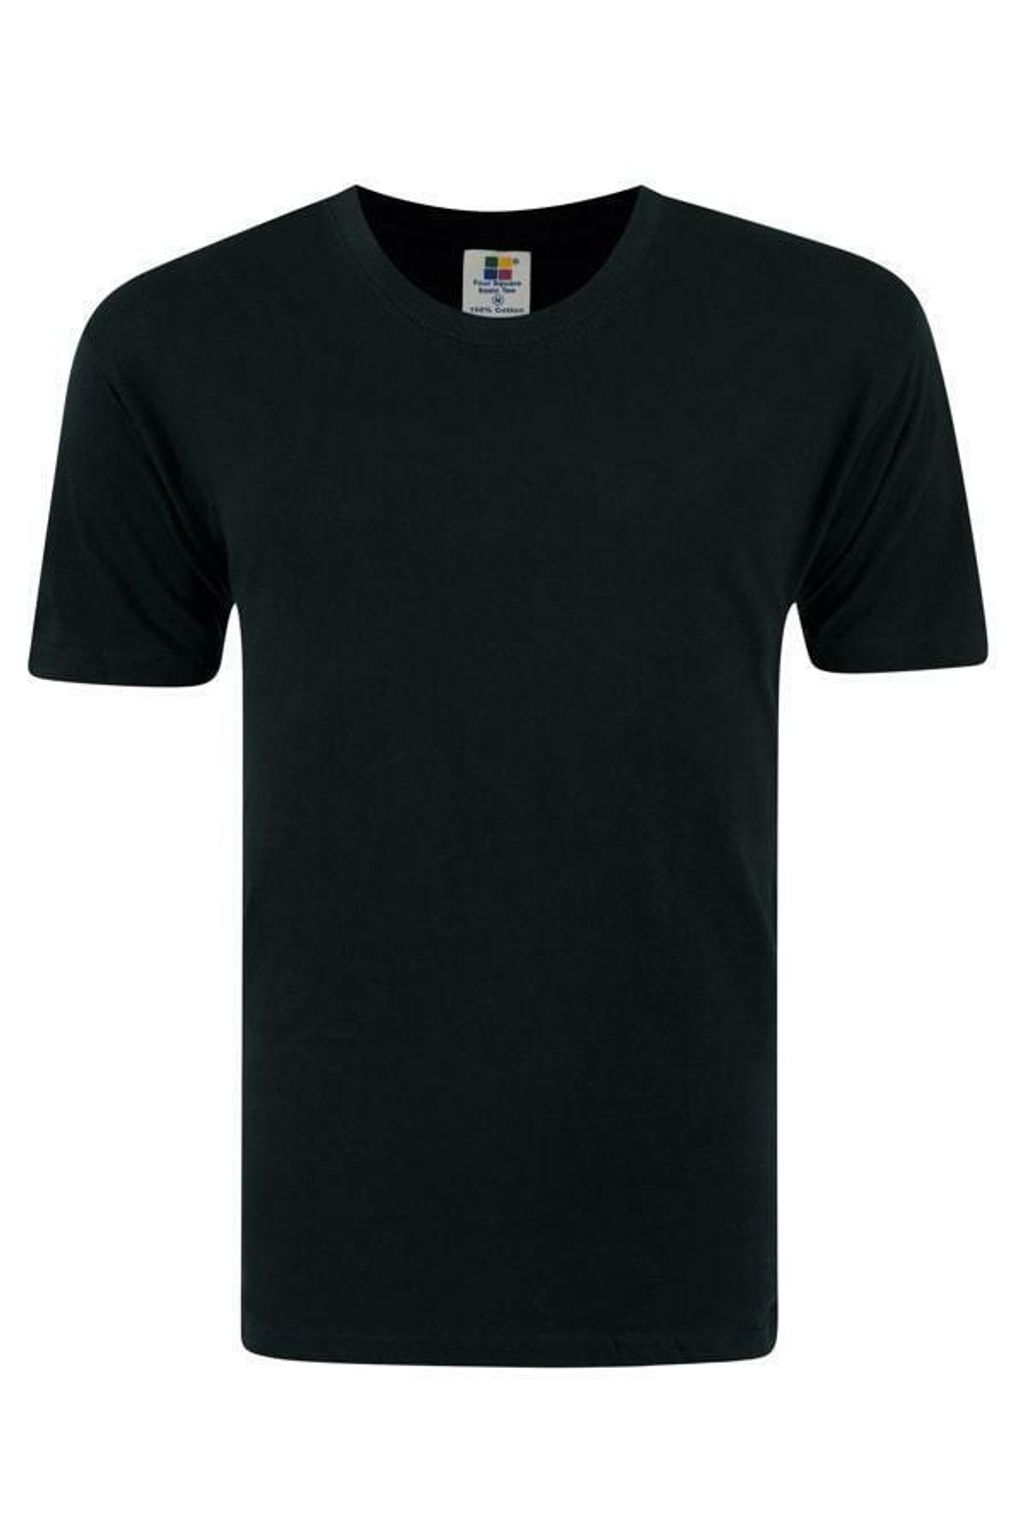 foursquare-160gsm-roundneck-black-tshirt6